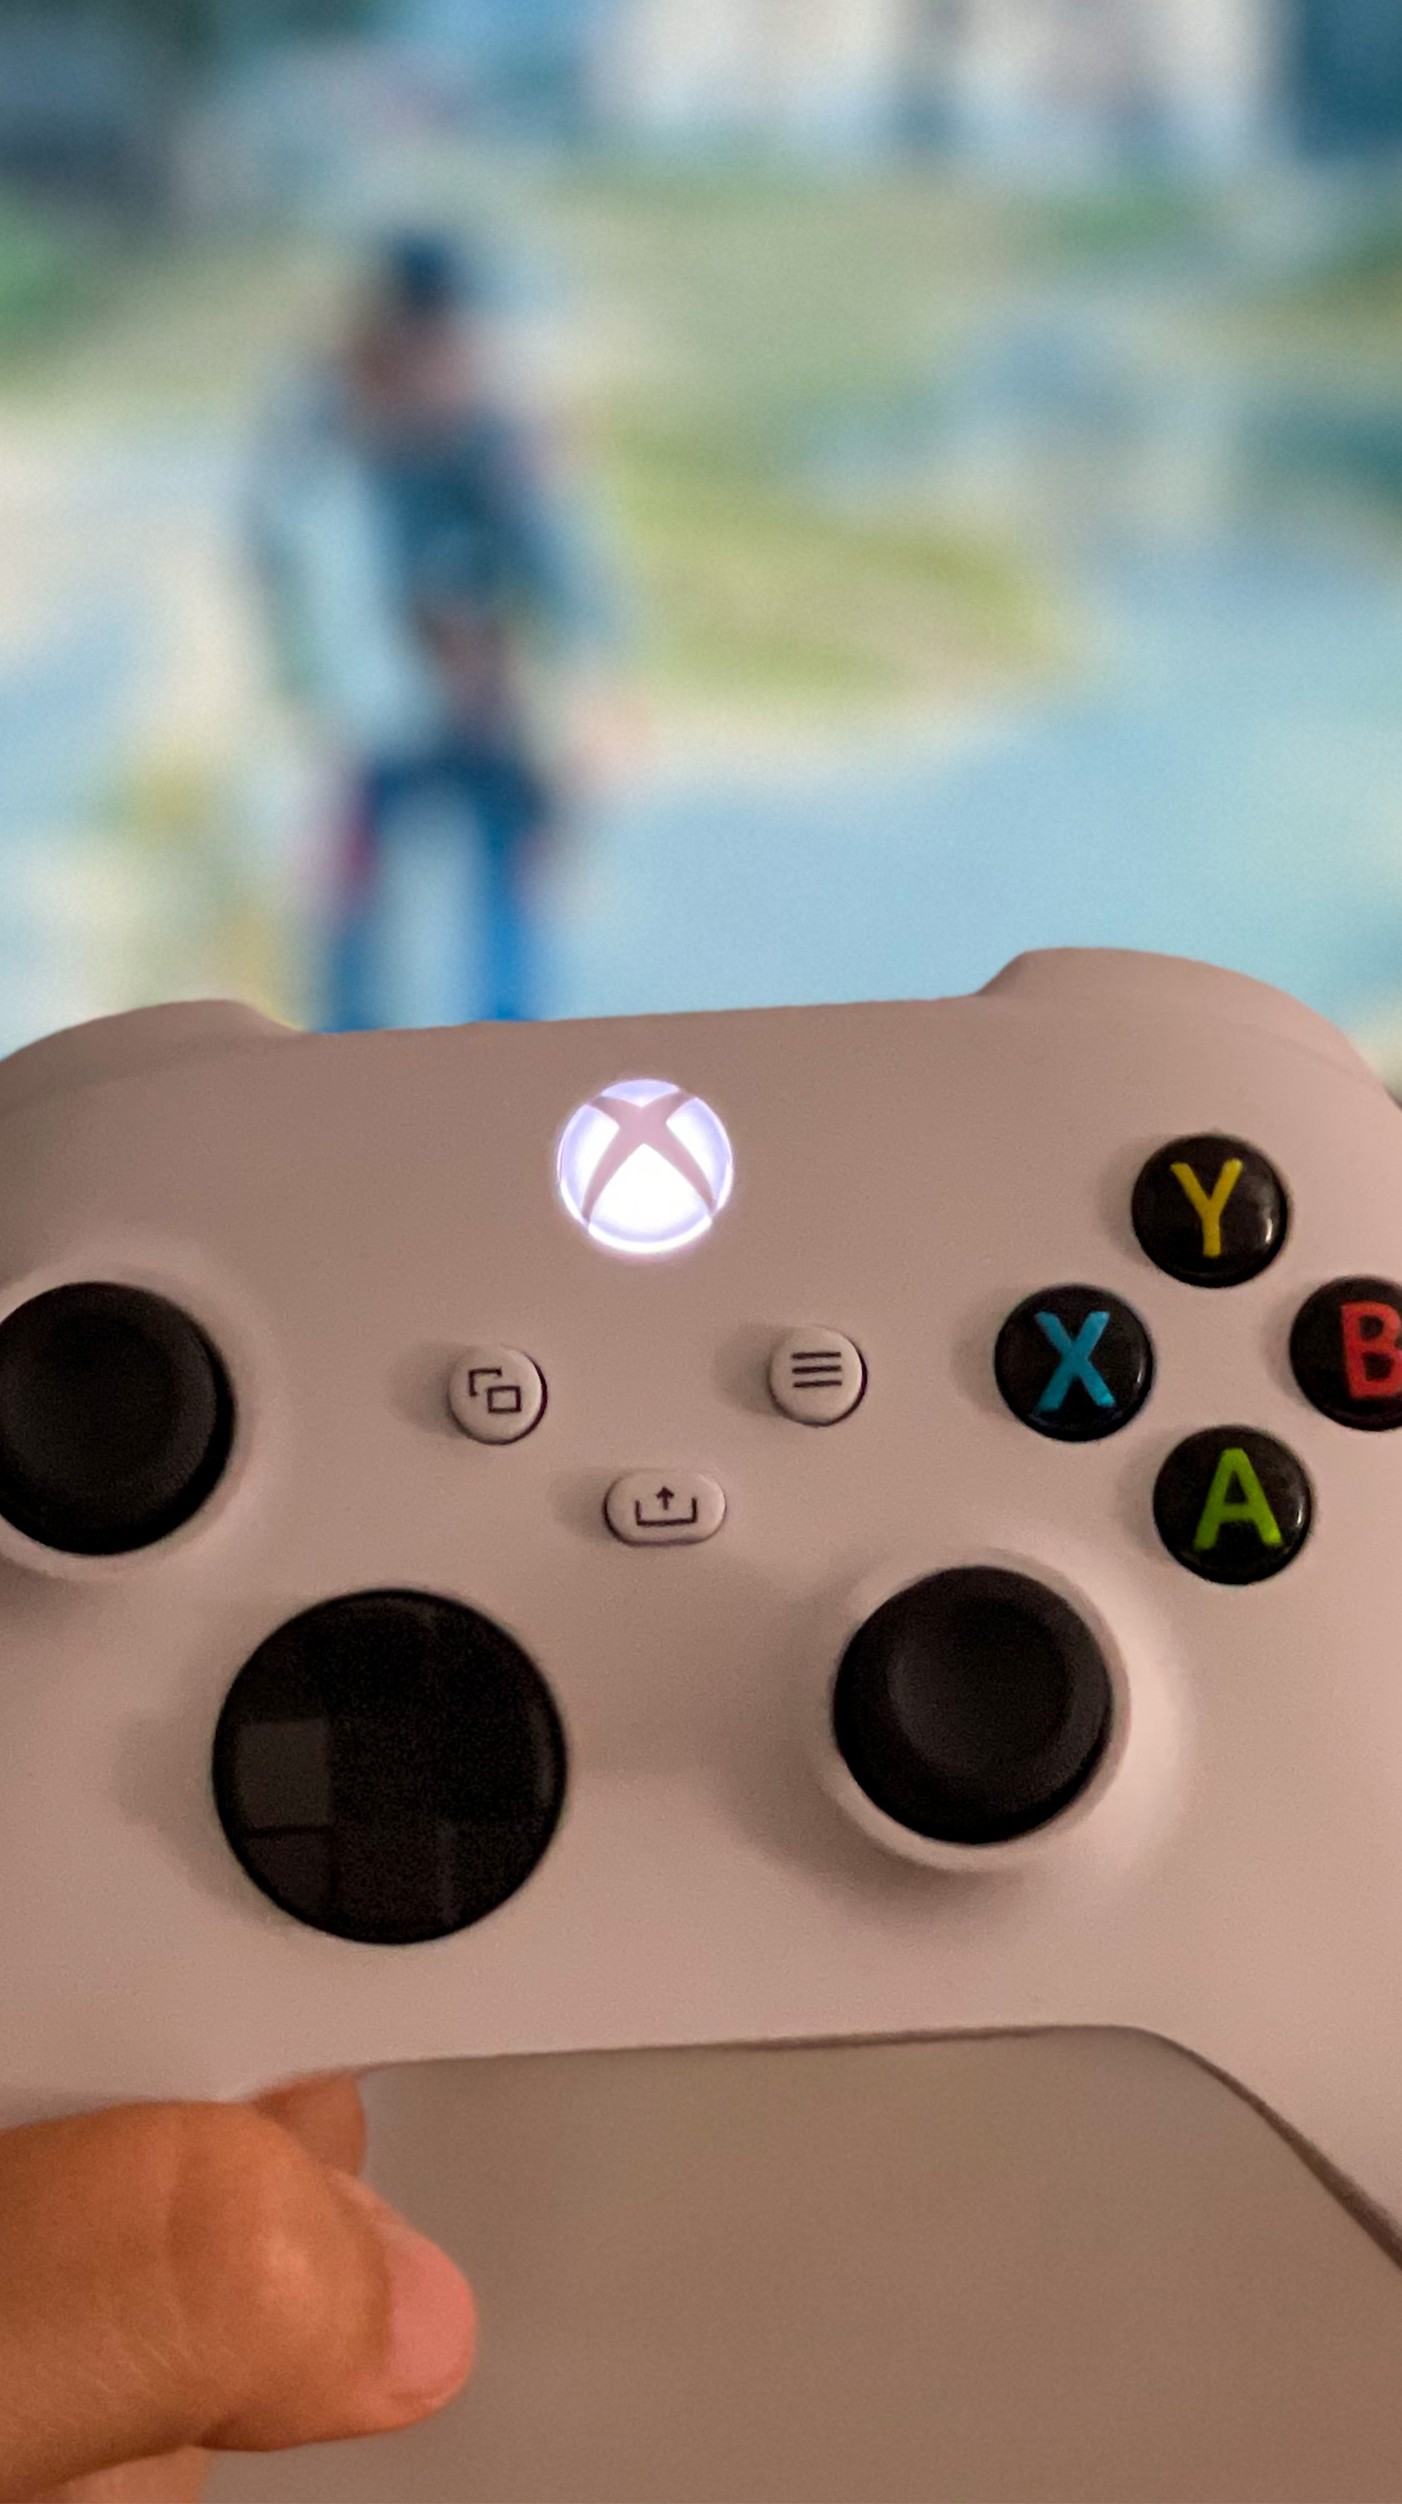 Microsoft realiza o terceiro aumento de preço do Xbox Series X na